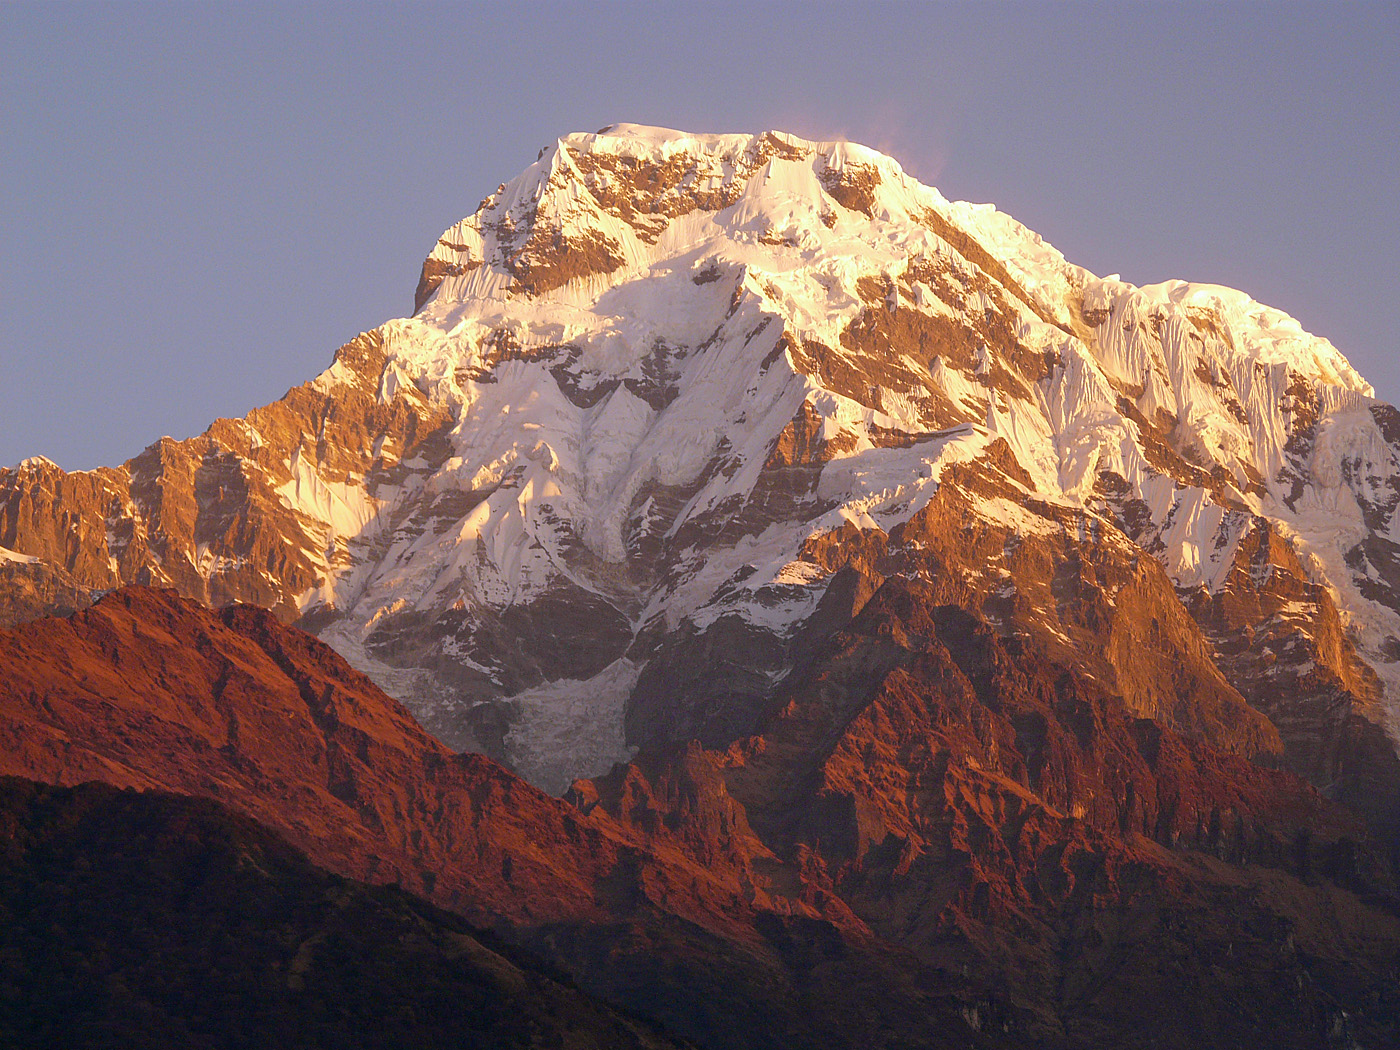 Annapurna South and Annapurna I